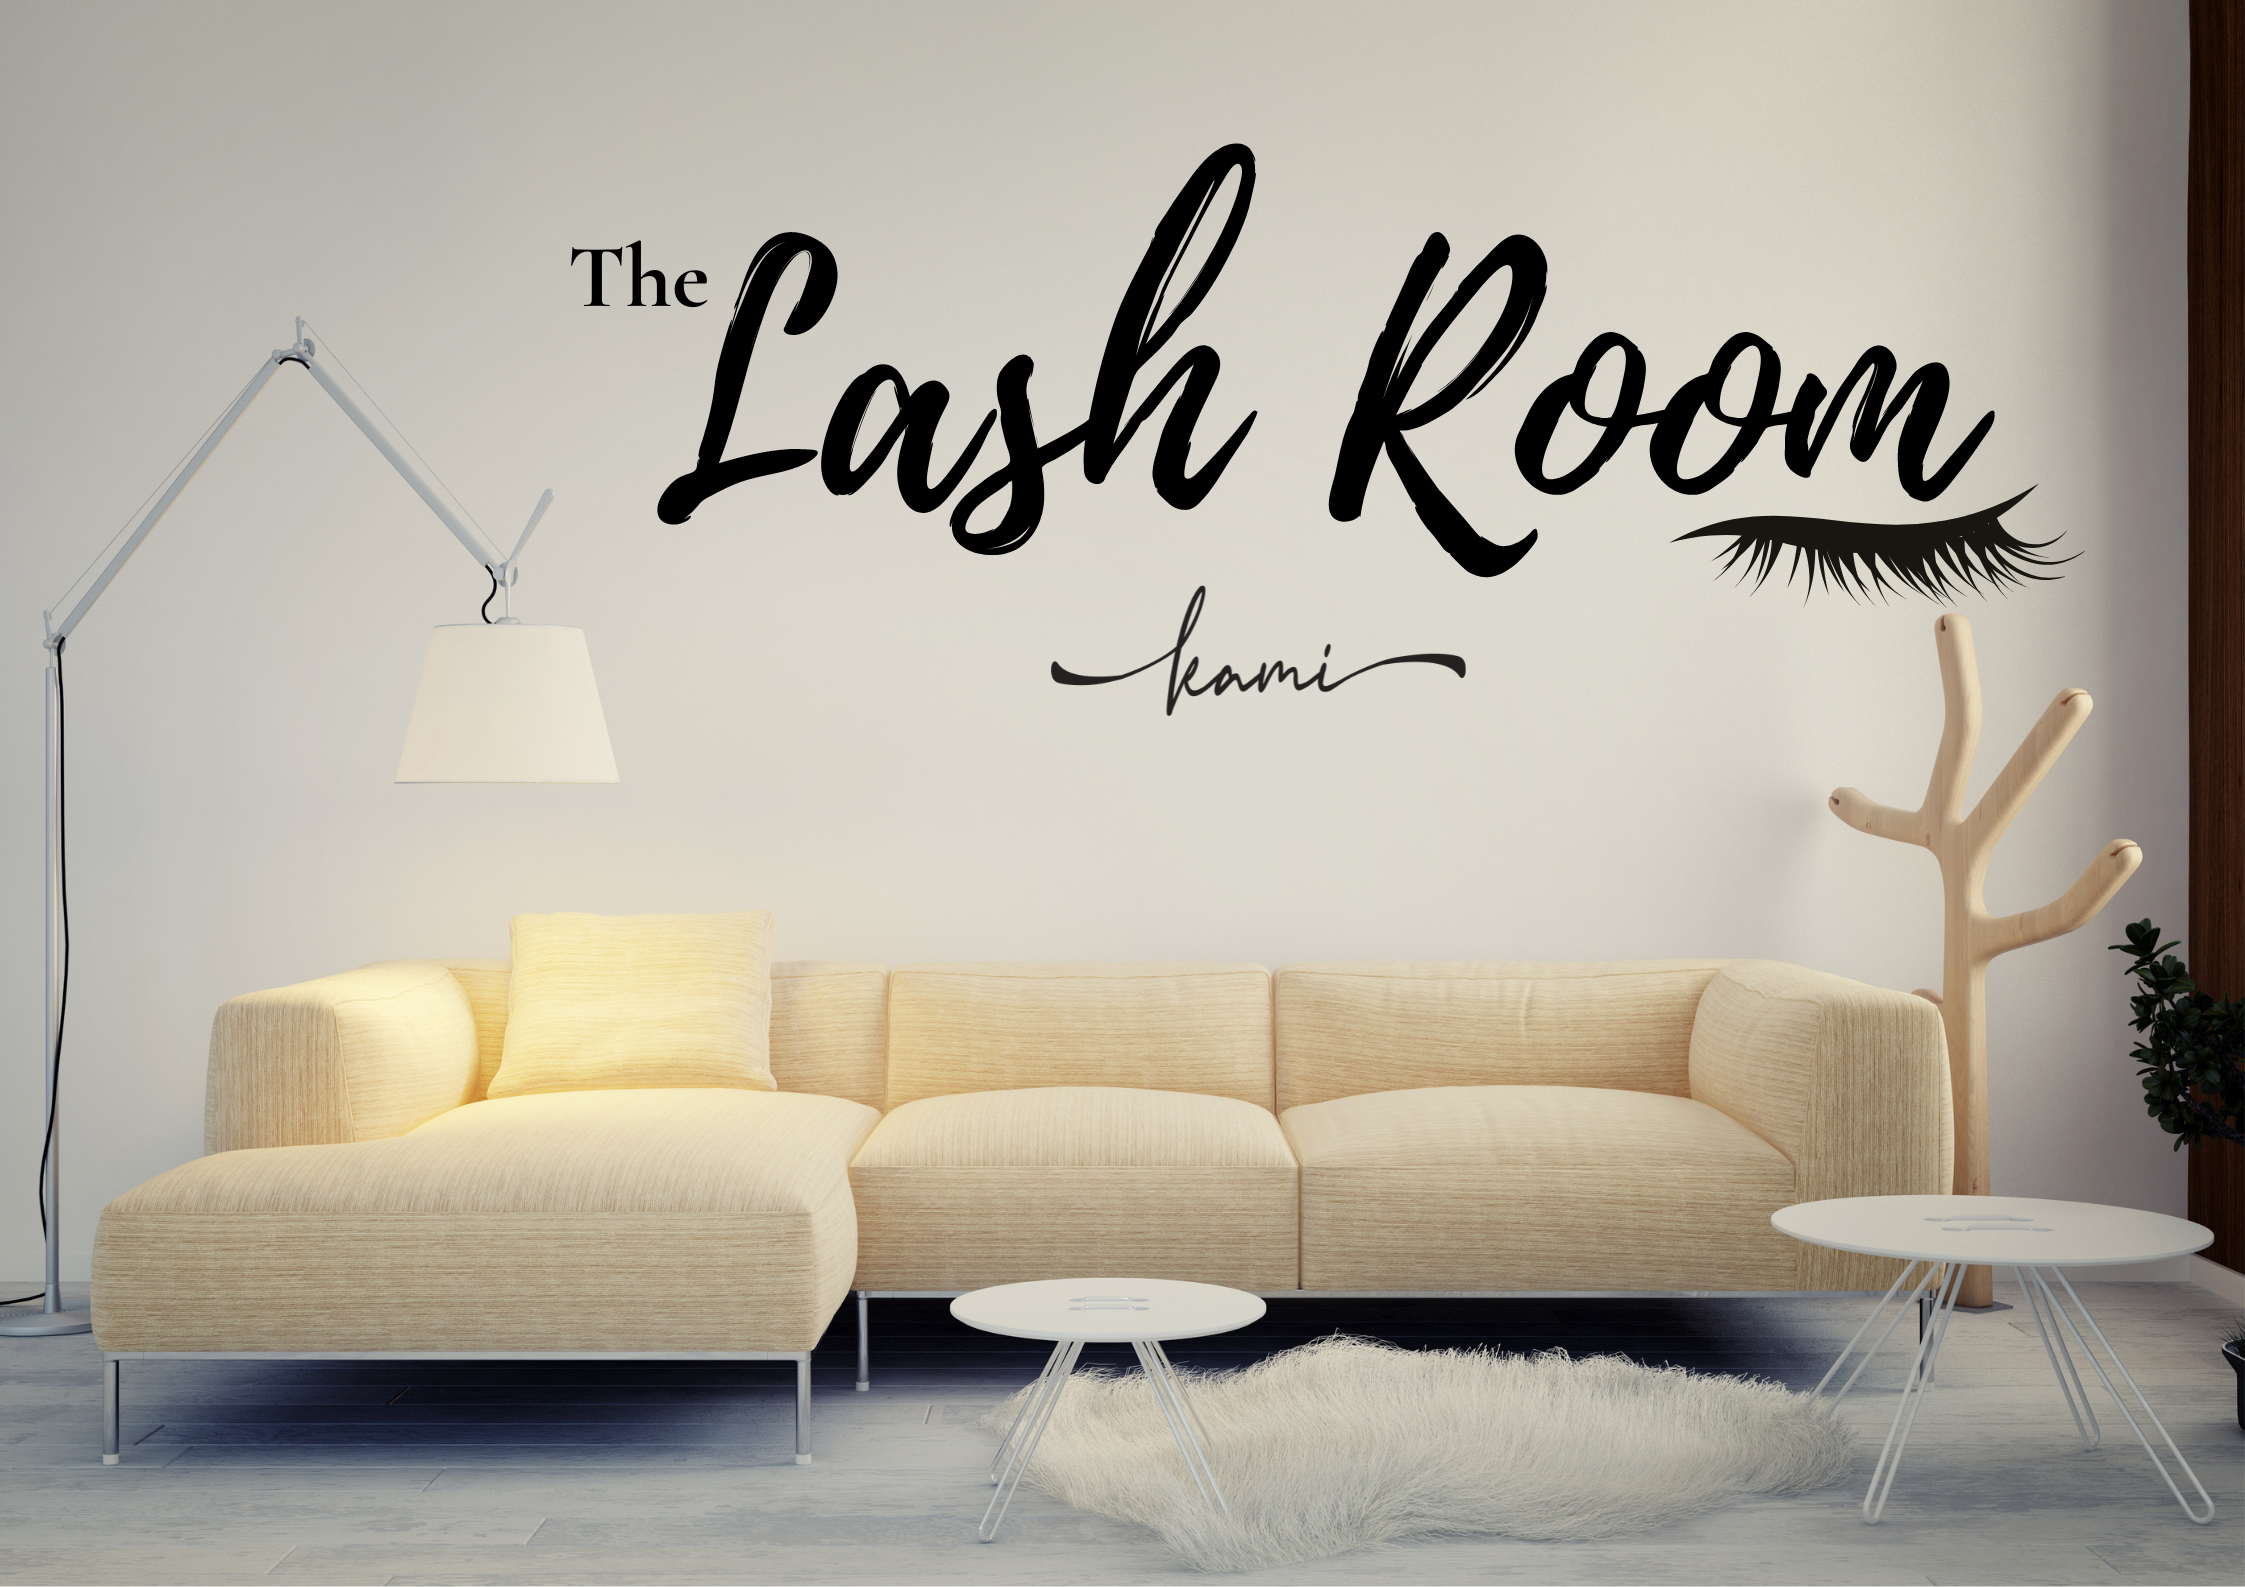 How To Set Up A Lash Room - Kami Lashy